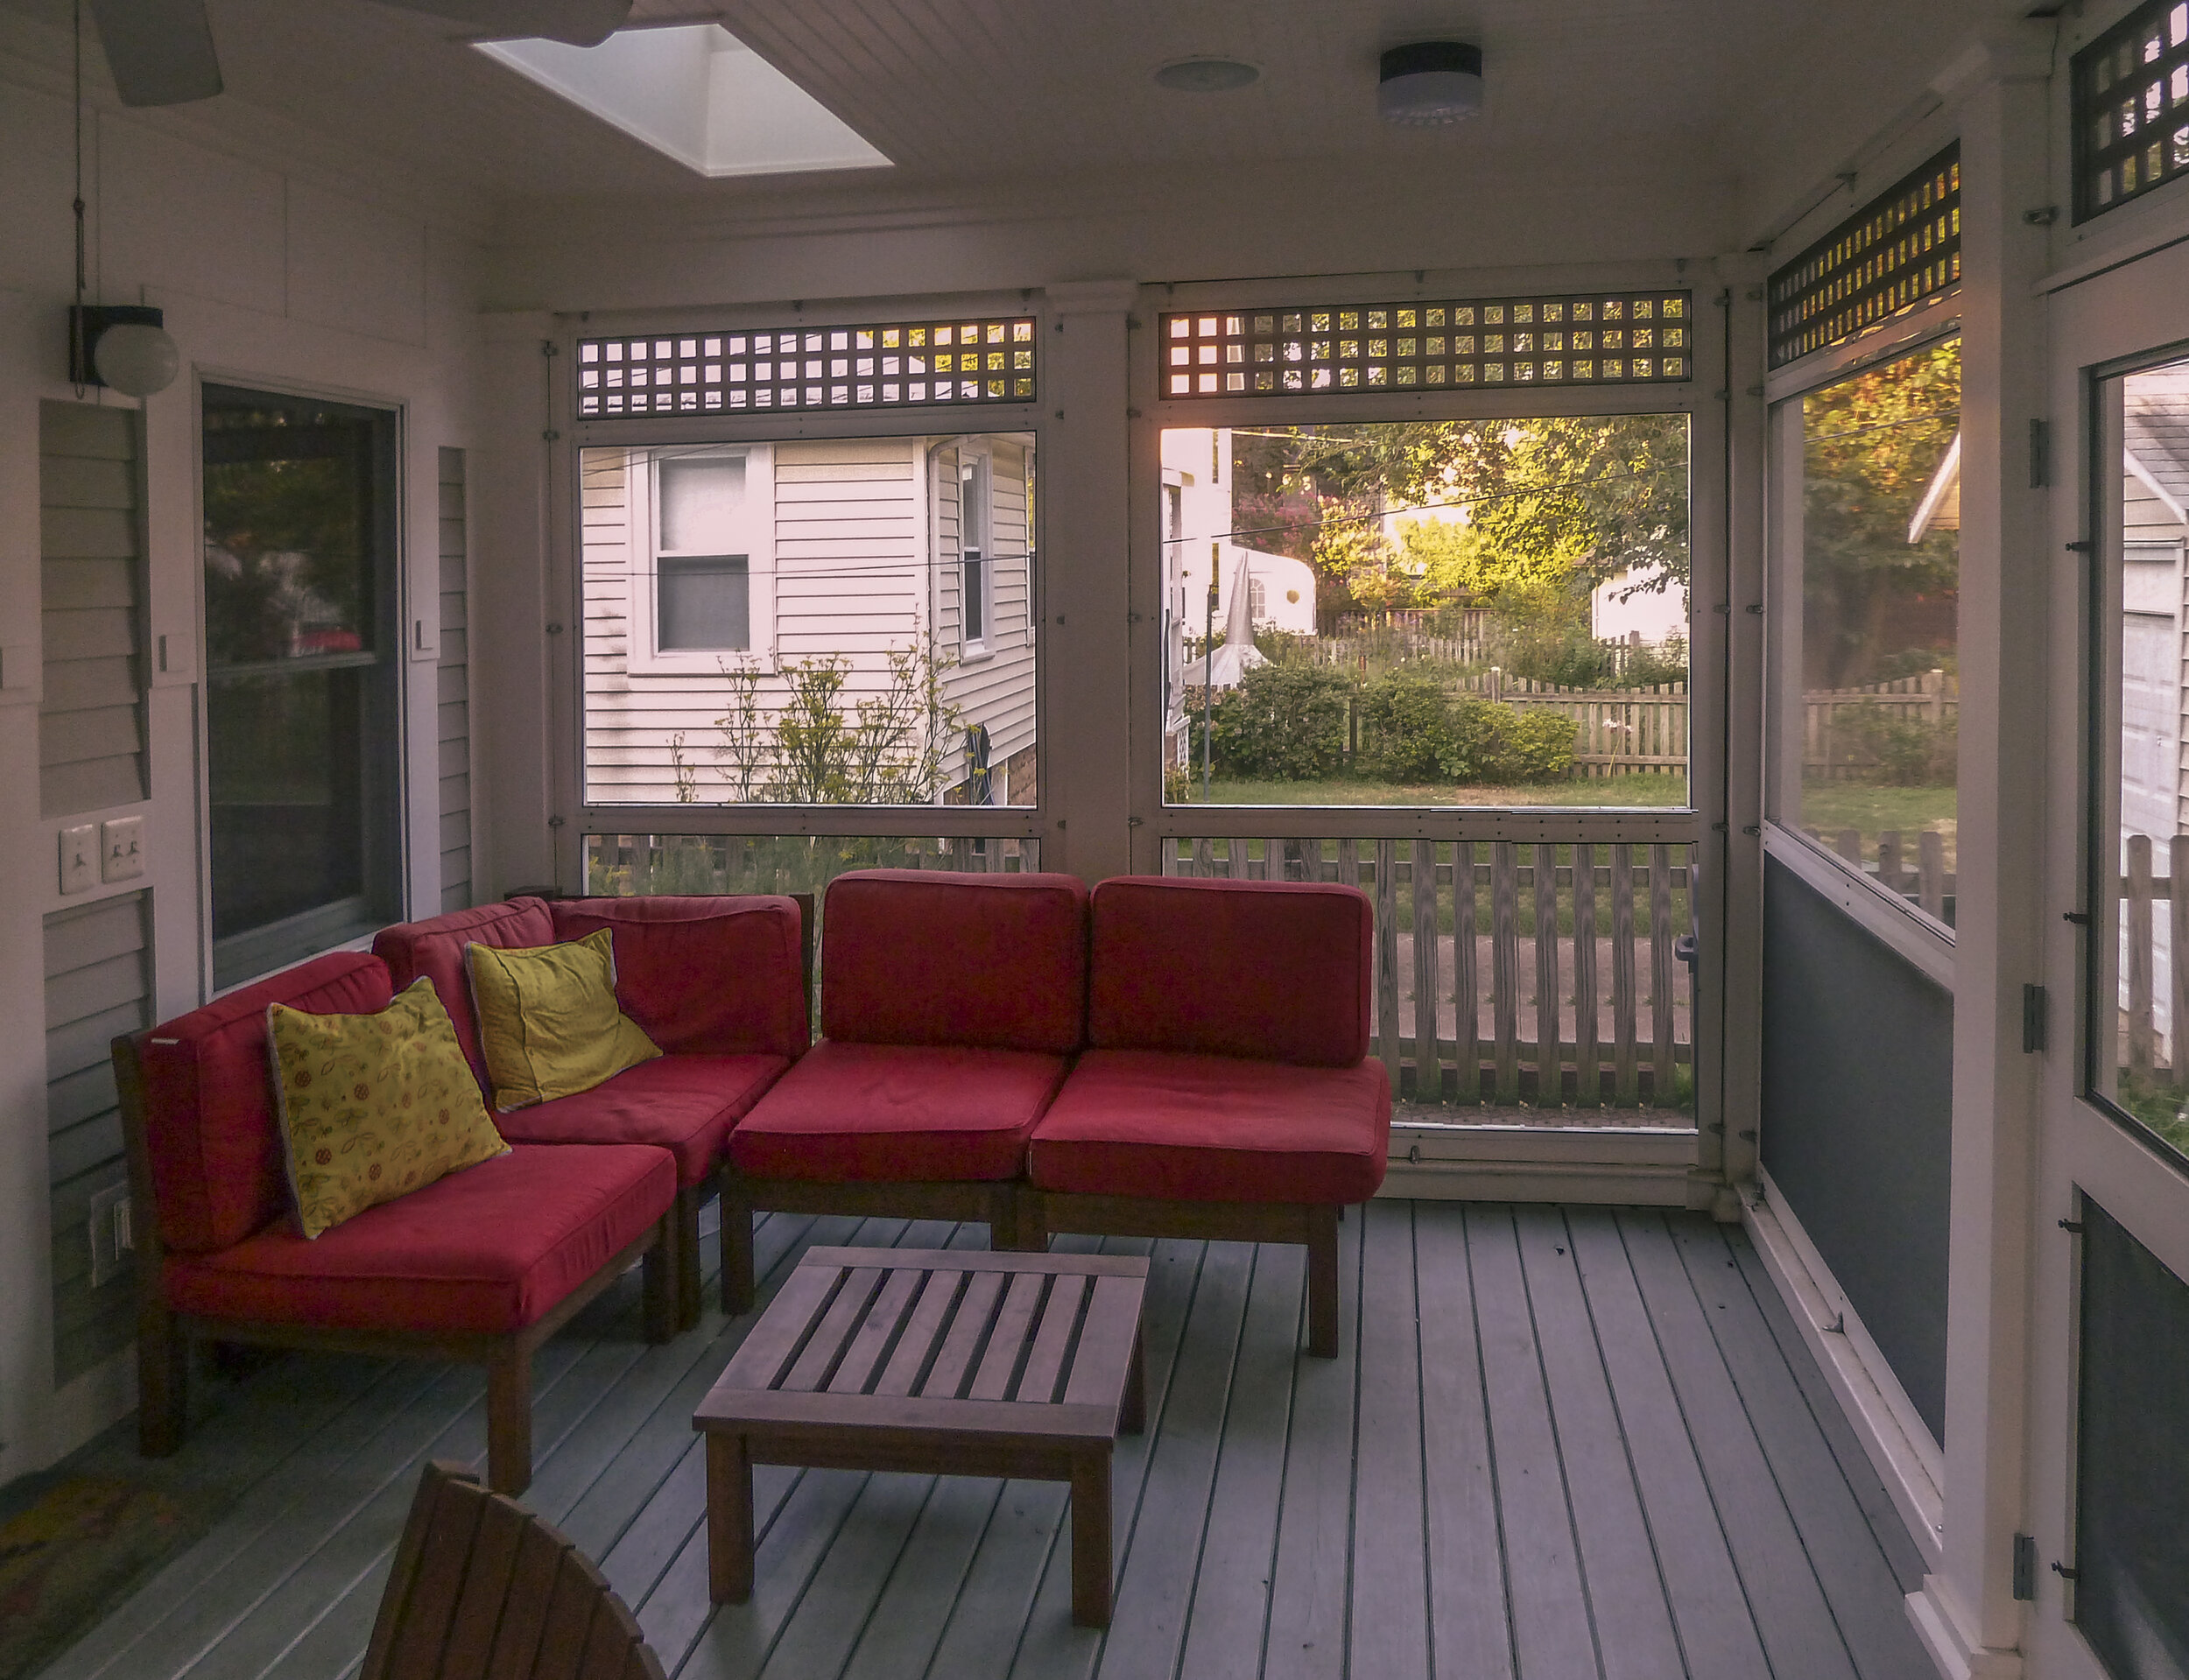 11 - 107 Walnut Street - New Backyard Porch Interior View2805.jpg